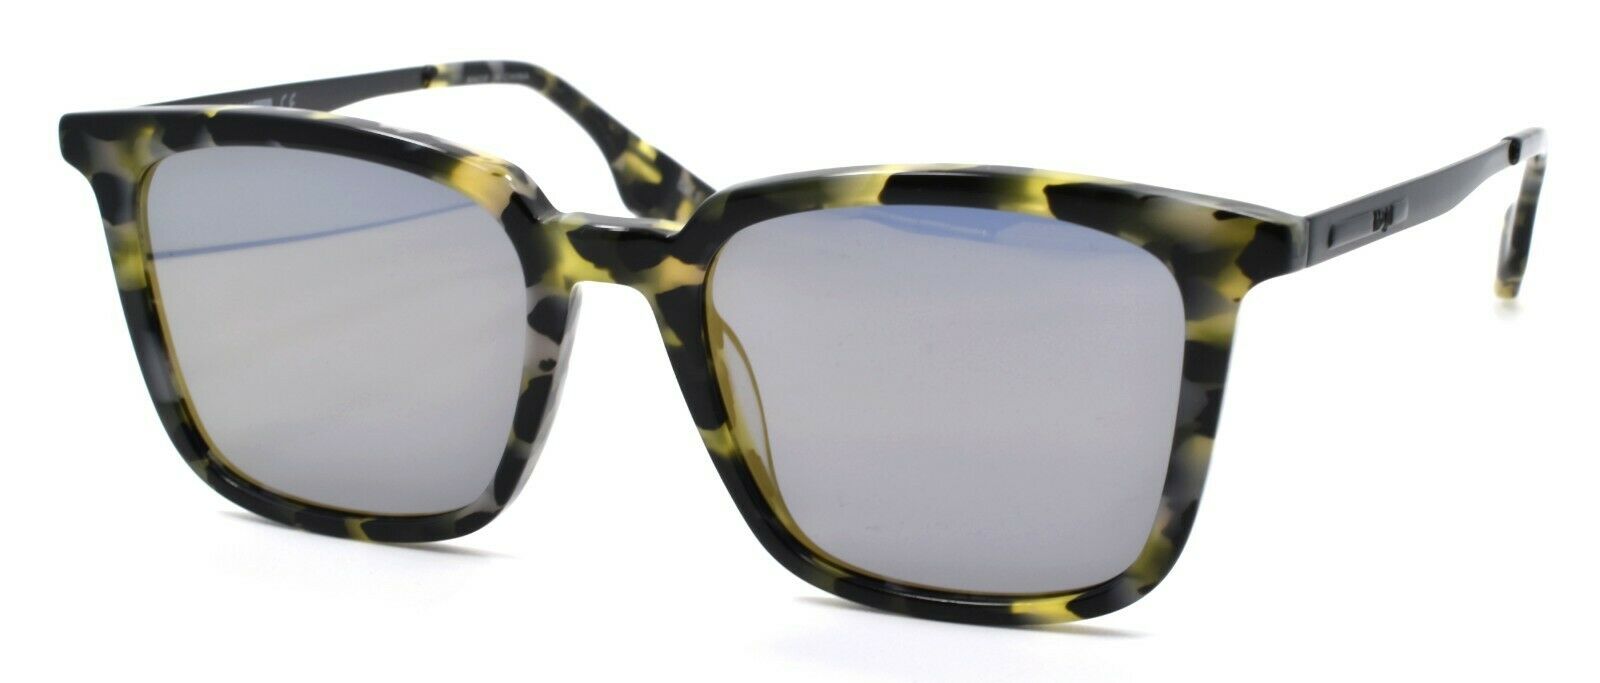 1-McQ Alexander McQueen MQ0070S 005 Unisex Sunglasses Havana & Black / Mirrored-889652064840-IKSpecs